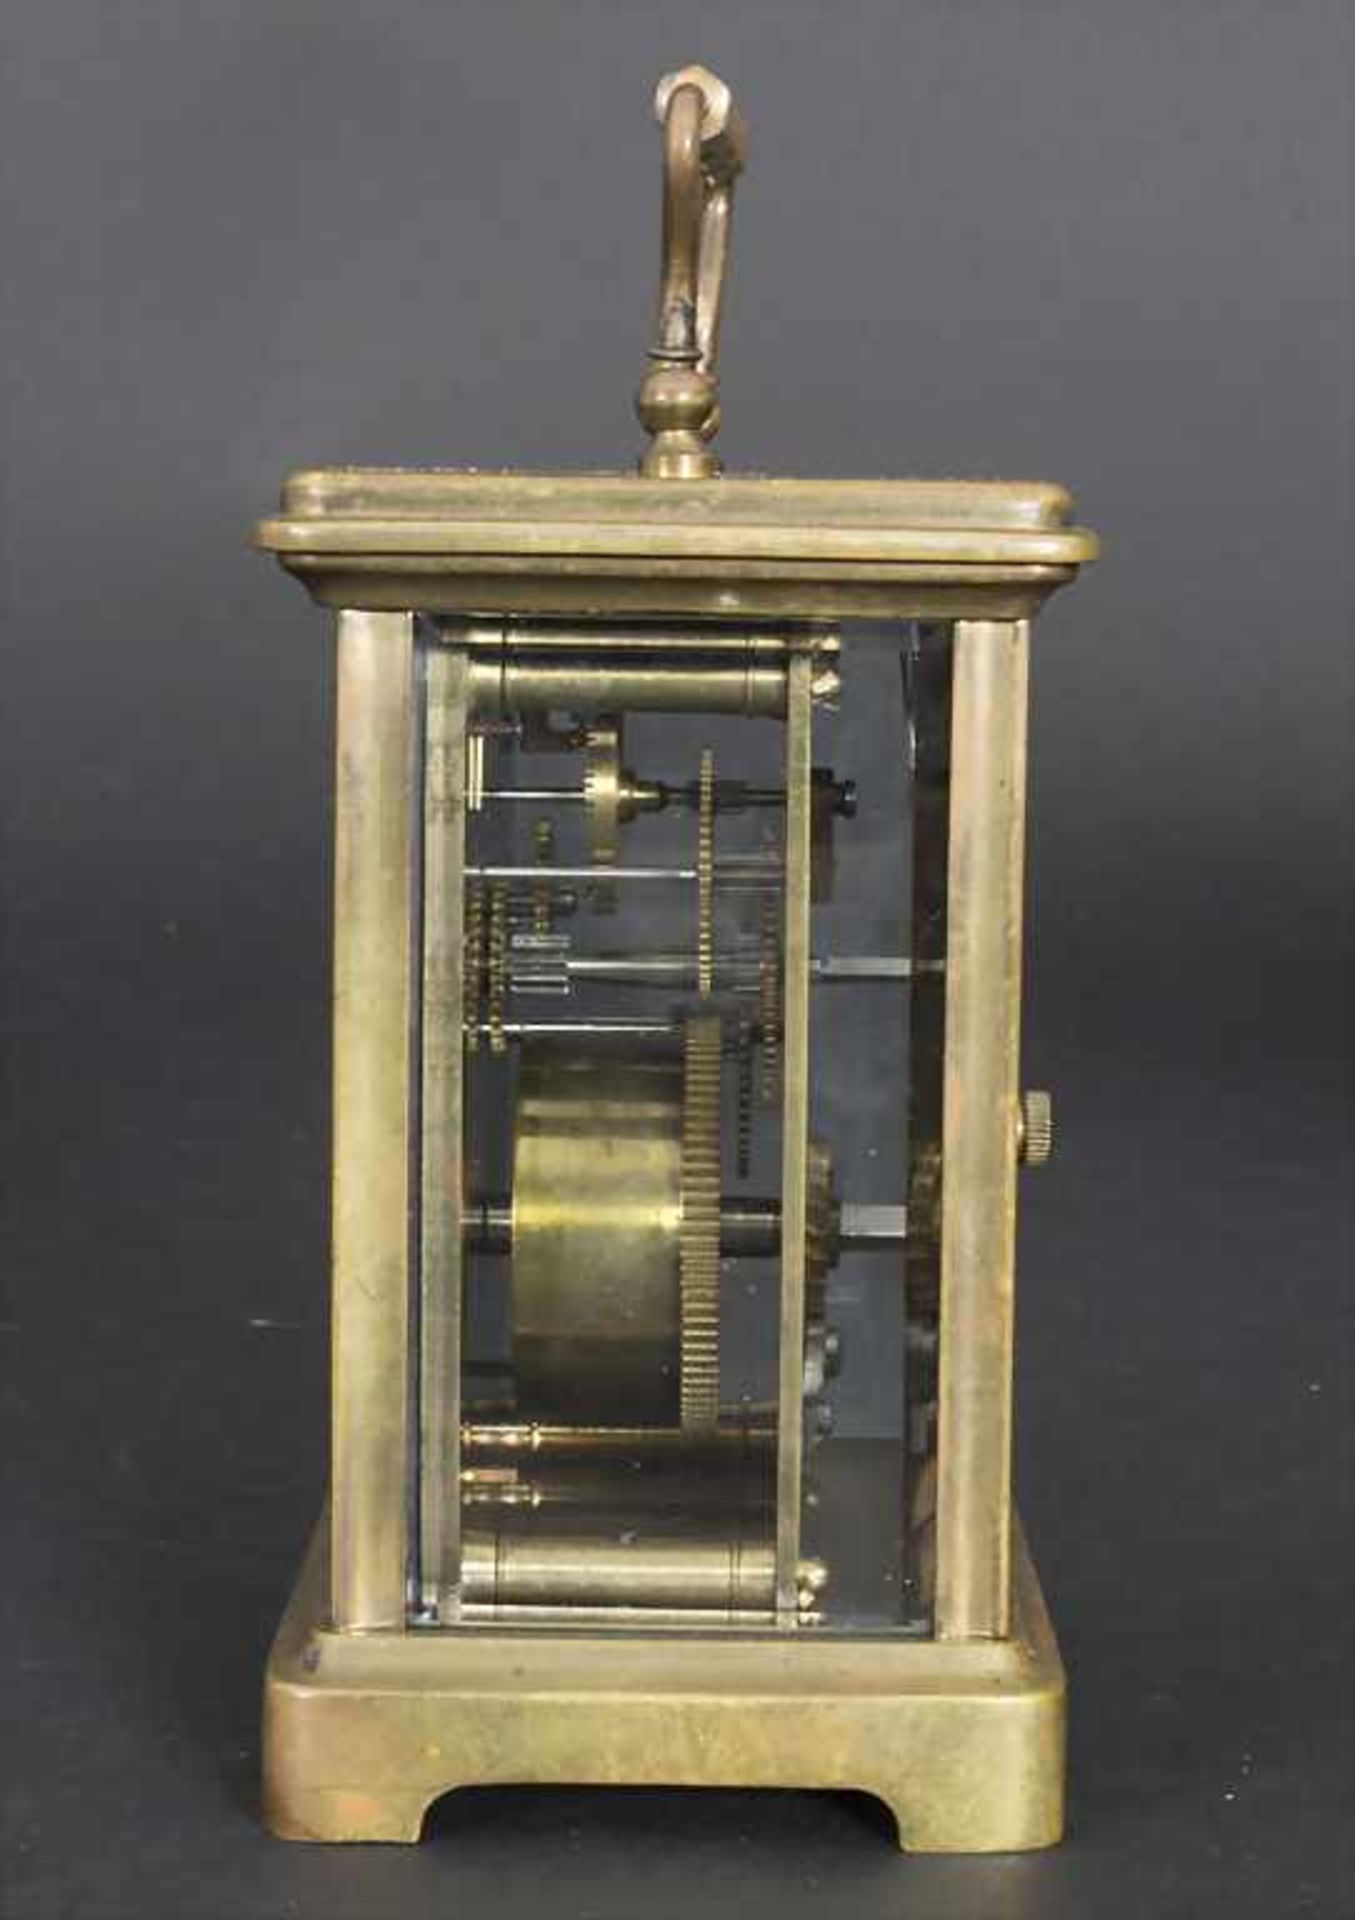 Reiseuhr / A travel clock, um 1900Material: Reiseuhr im Etui, mit Aufzug-Schlüssel,Gehäuse: rundum - Image 2 of 7